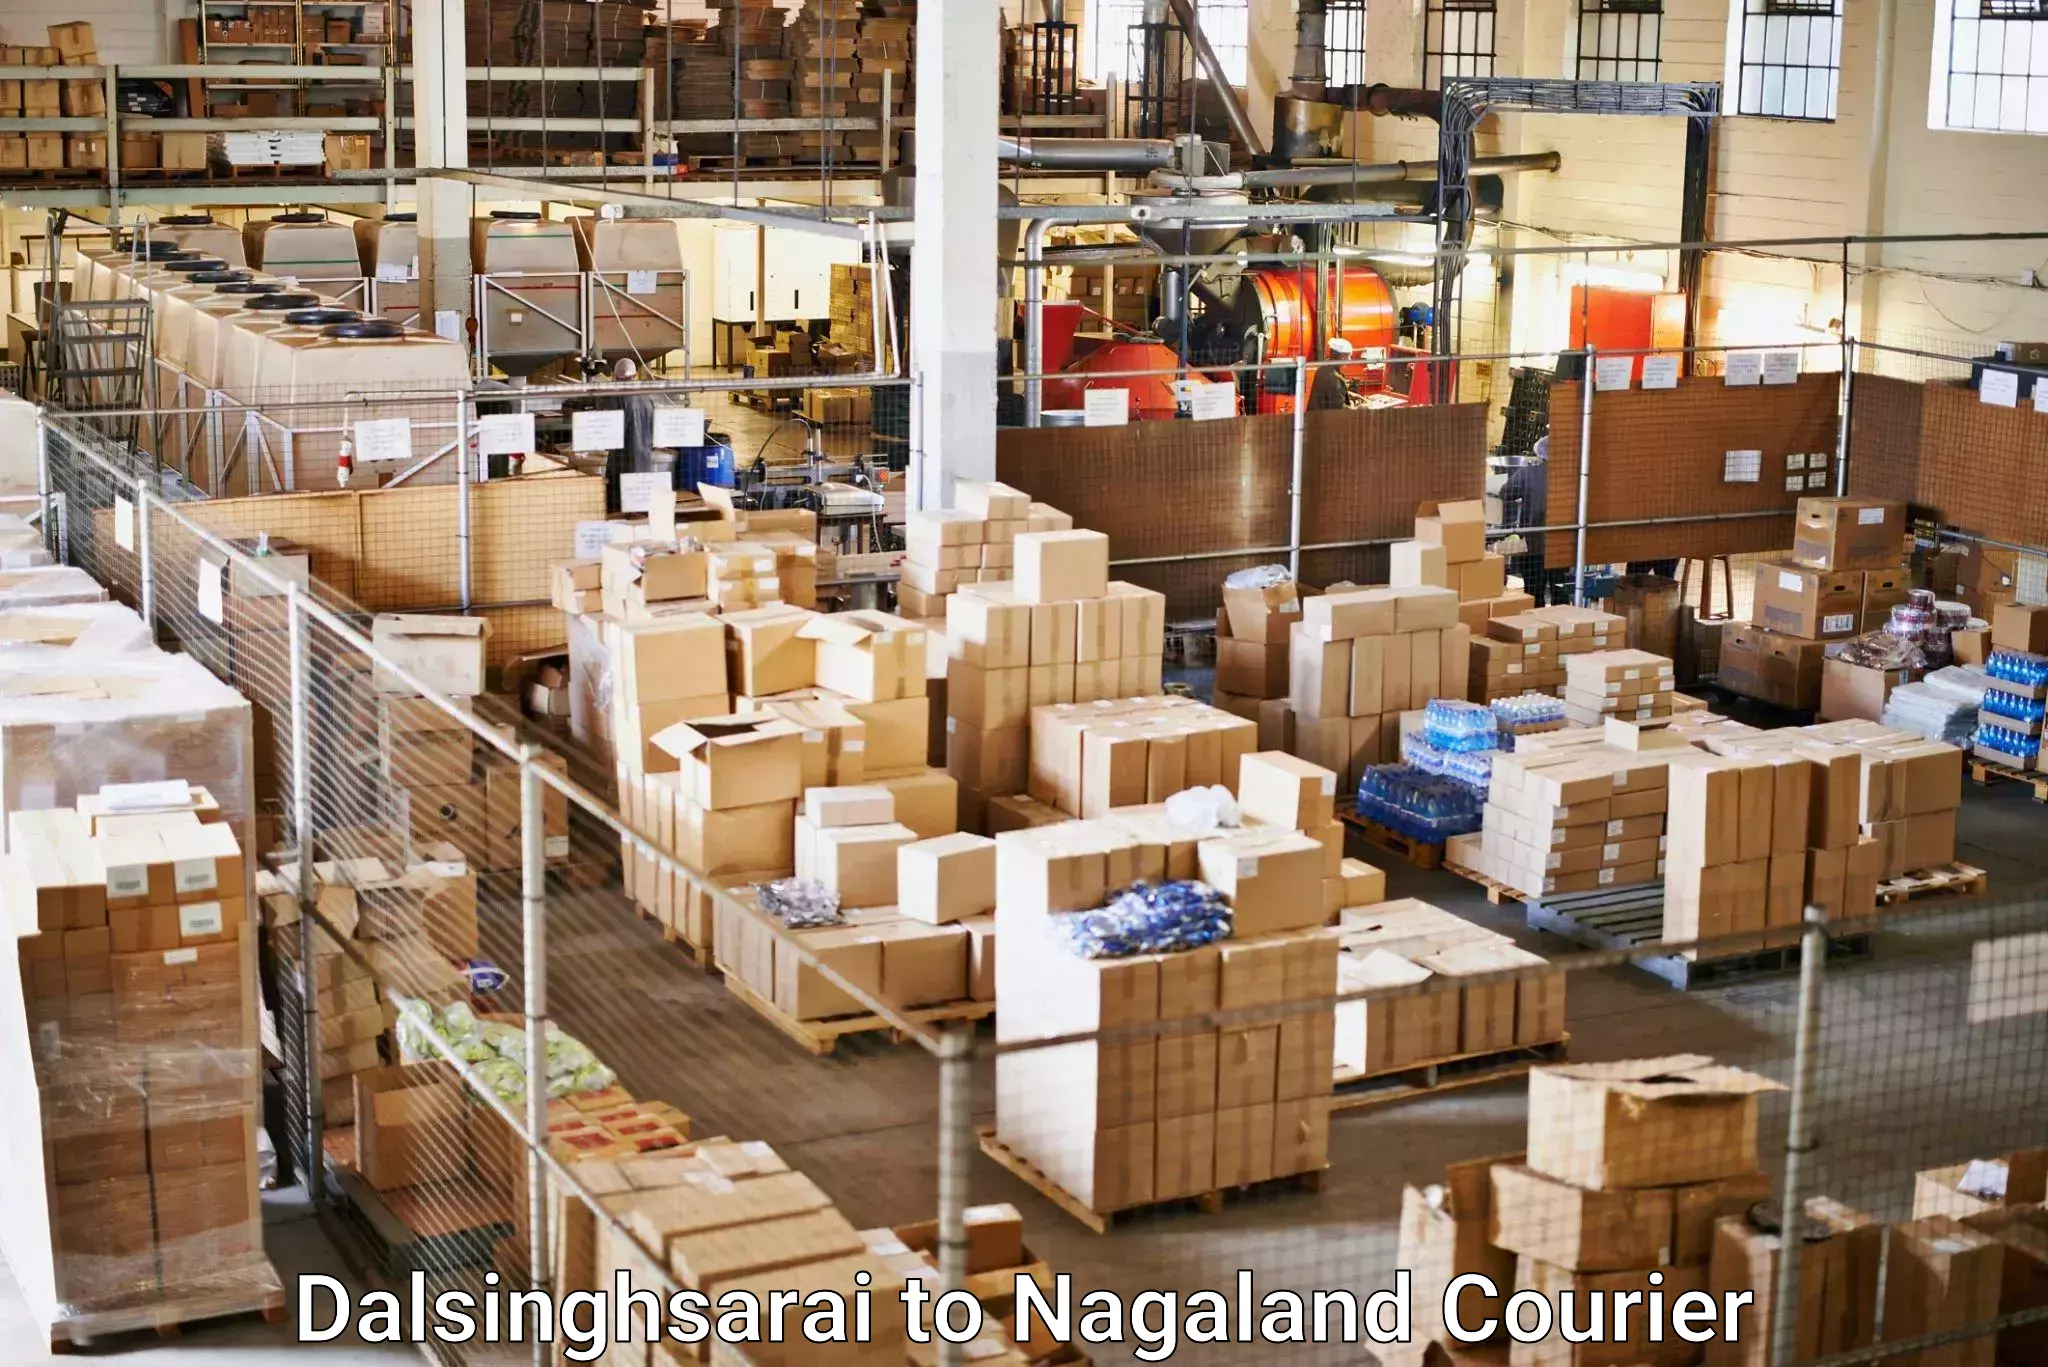 Ground shipping Dalsinghsarai to Nagaland